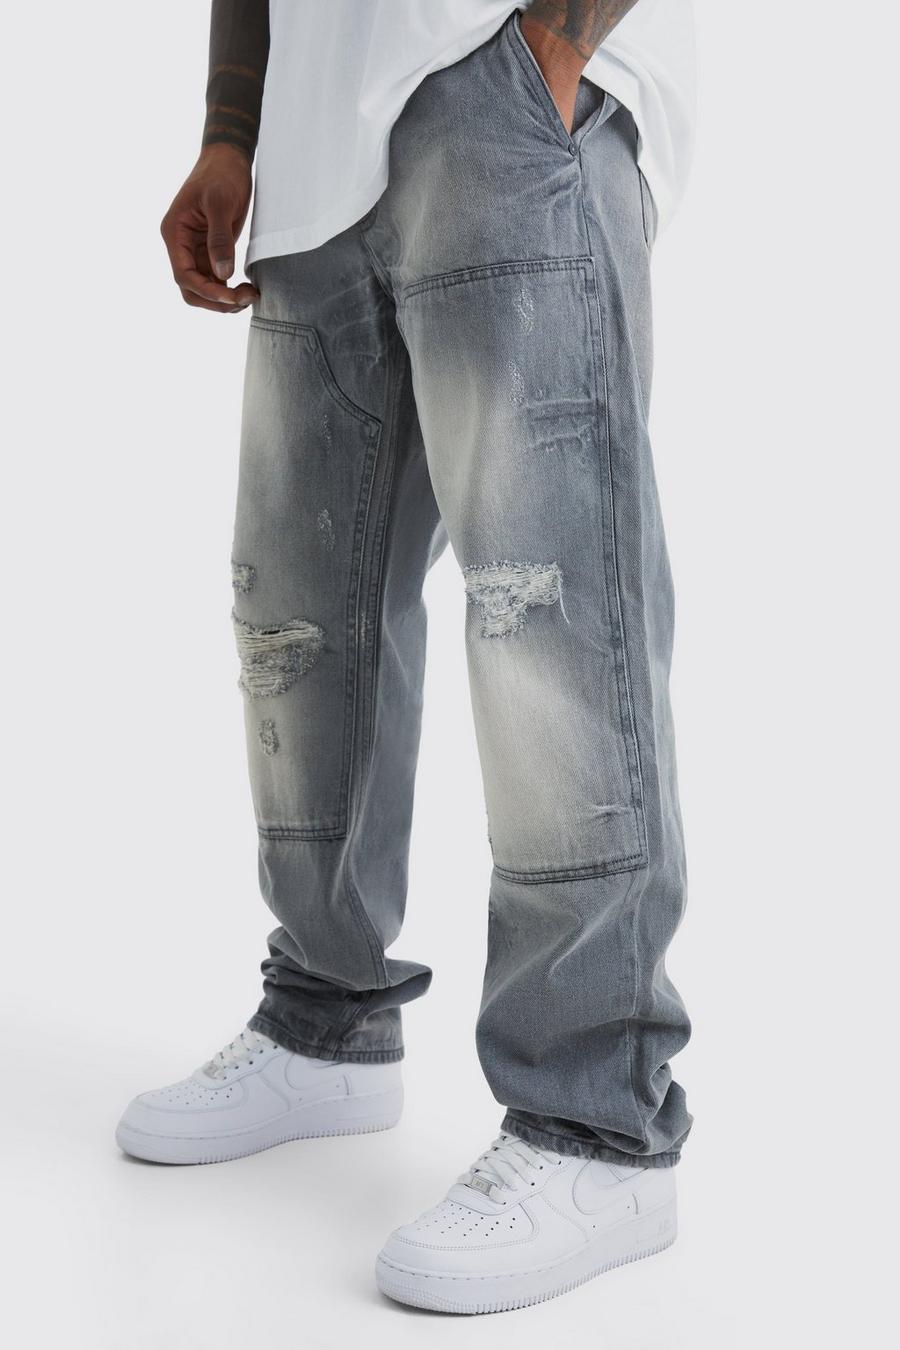 Jeans rilassati in denim rigido stile Carpenter in lavaggio sporco, Ice grey